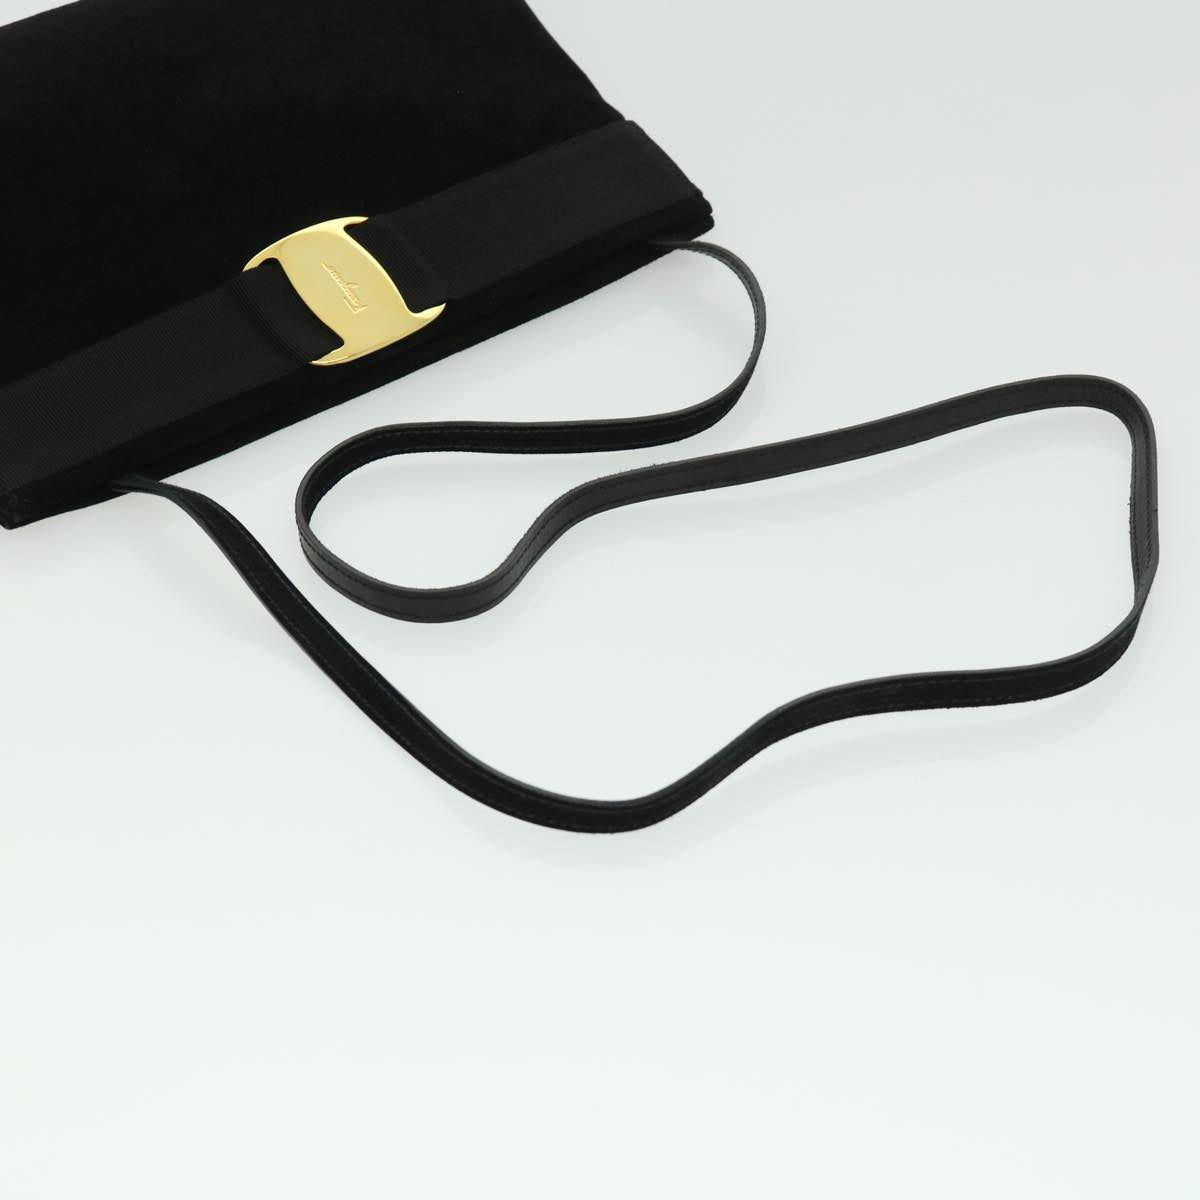 Salvatore Ferragamo cotton Shoulder Bag Black Auth 31579